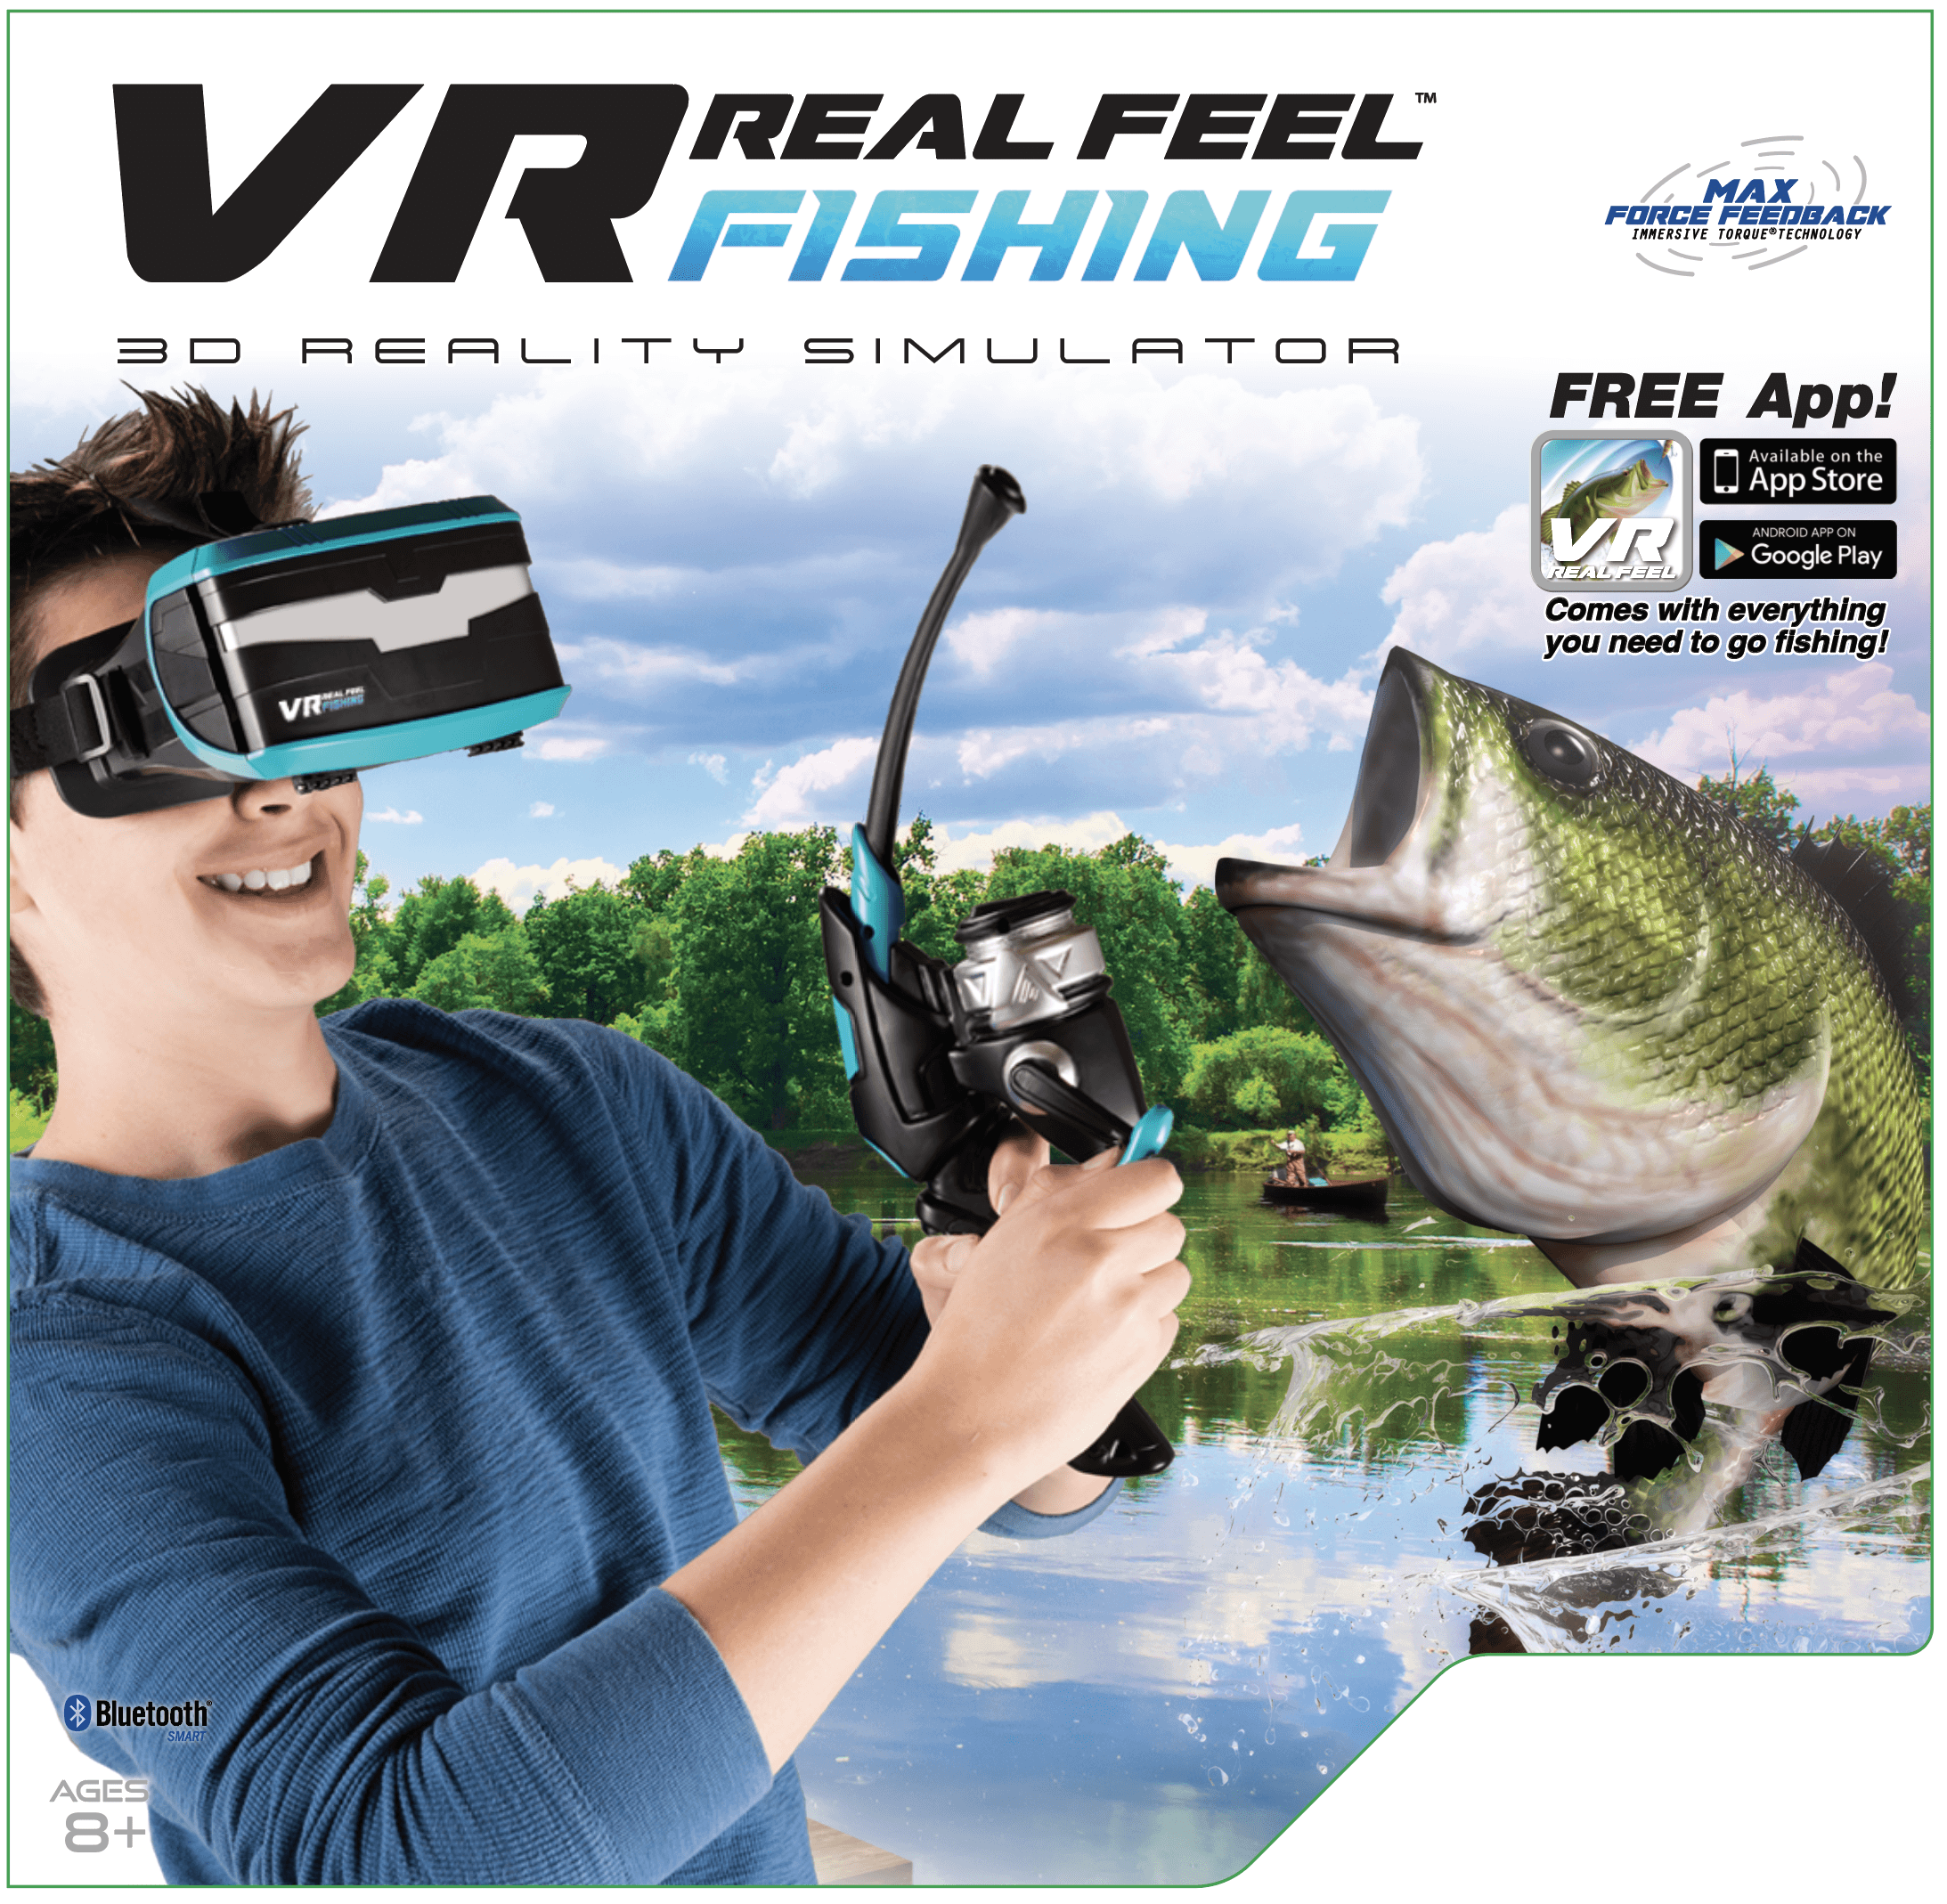 Vr Real Feel Fishing W Headset Walmart Com Walmart Com - ghost simulator roblox adams cell phone